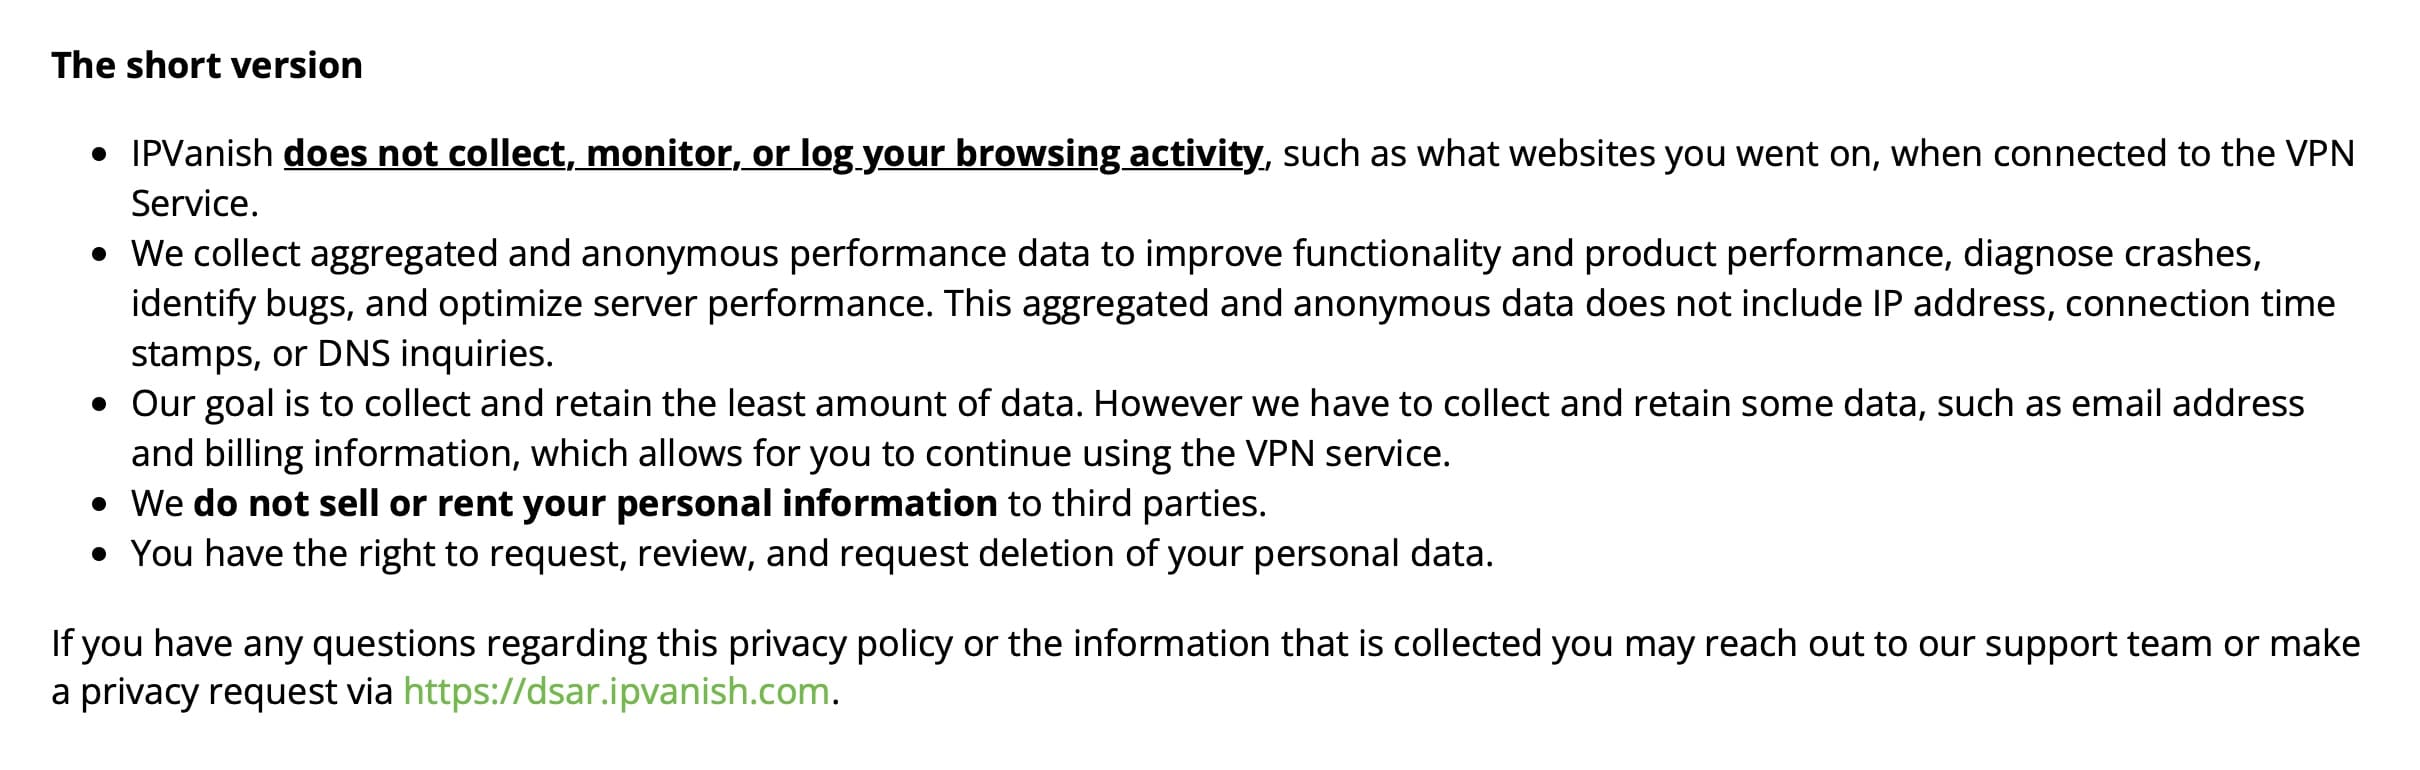 IPVanish - Privacy Policy